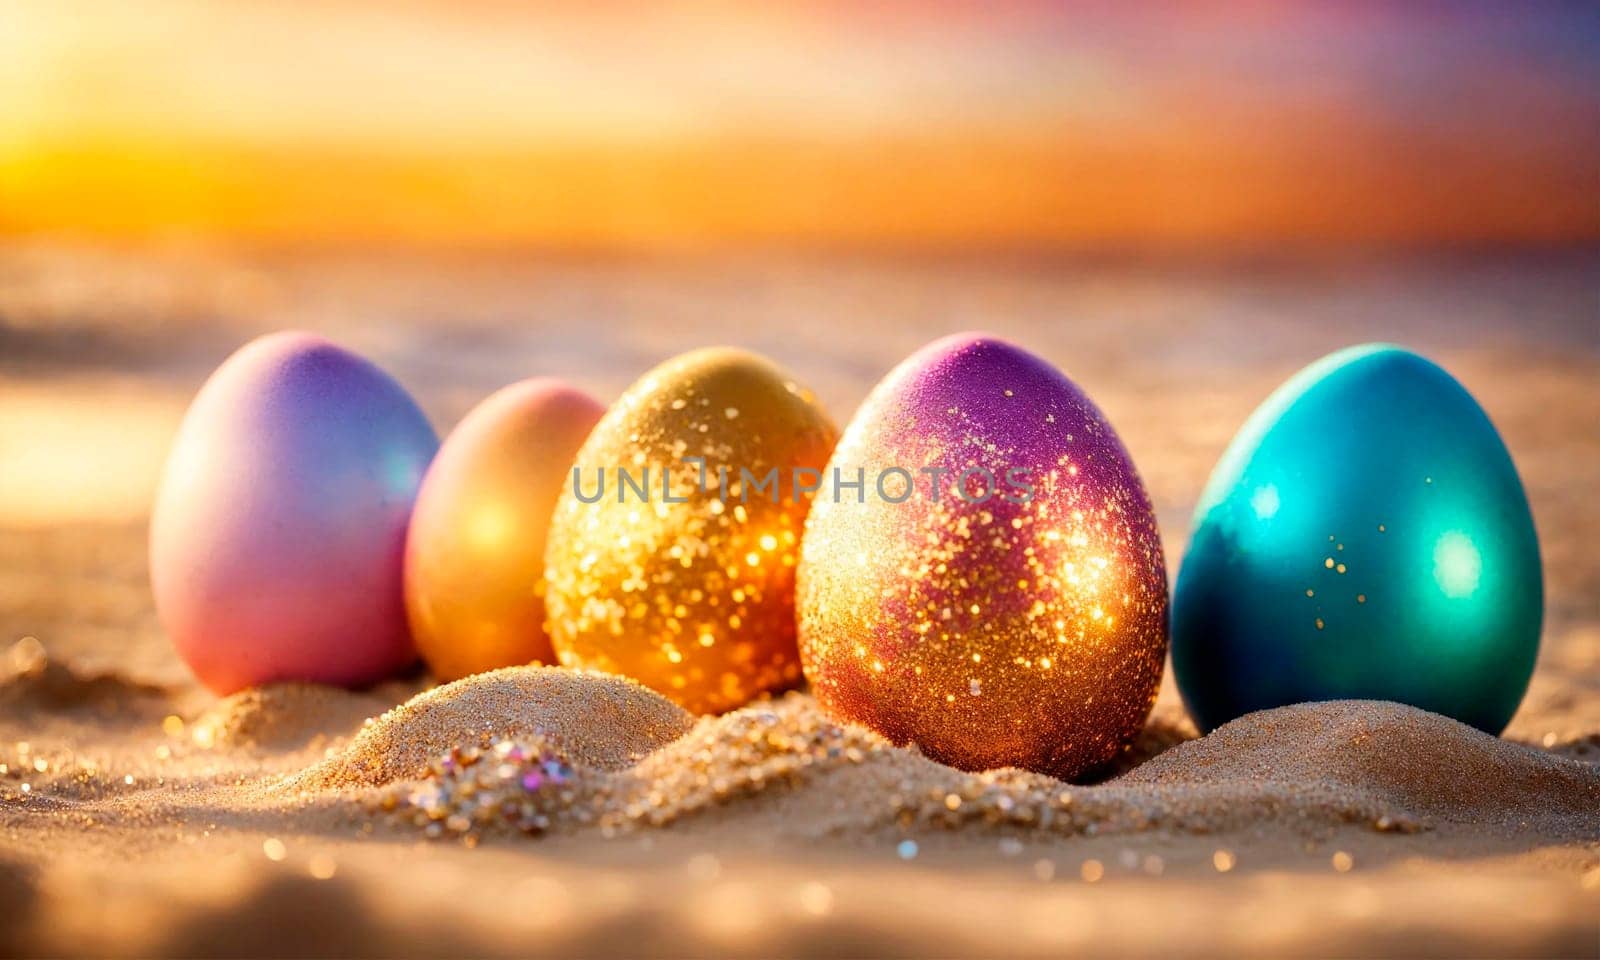 Easter eggs on the beach. Selective focus. by yanadjana